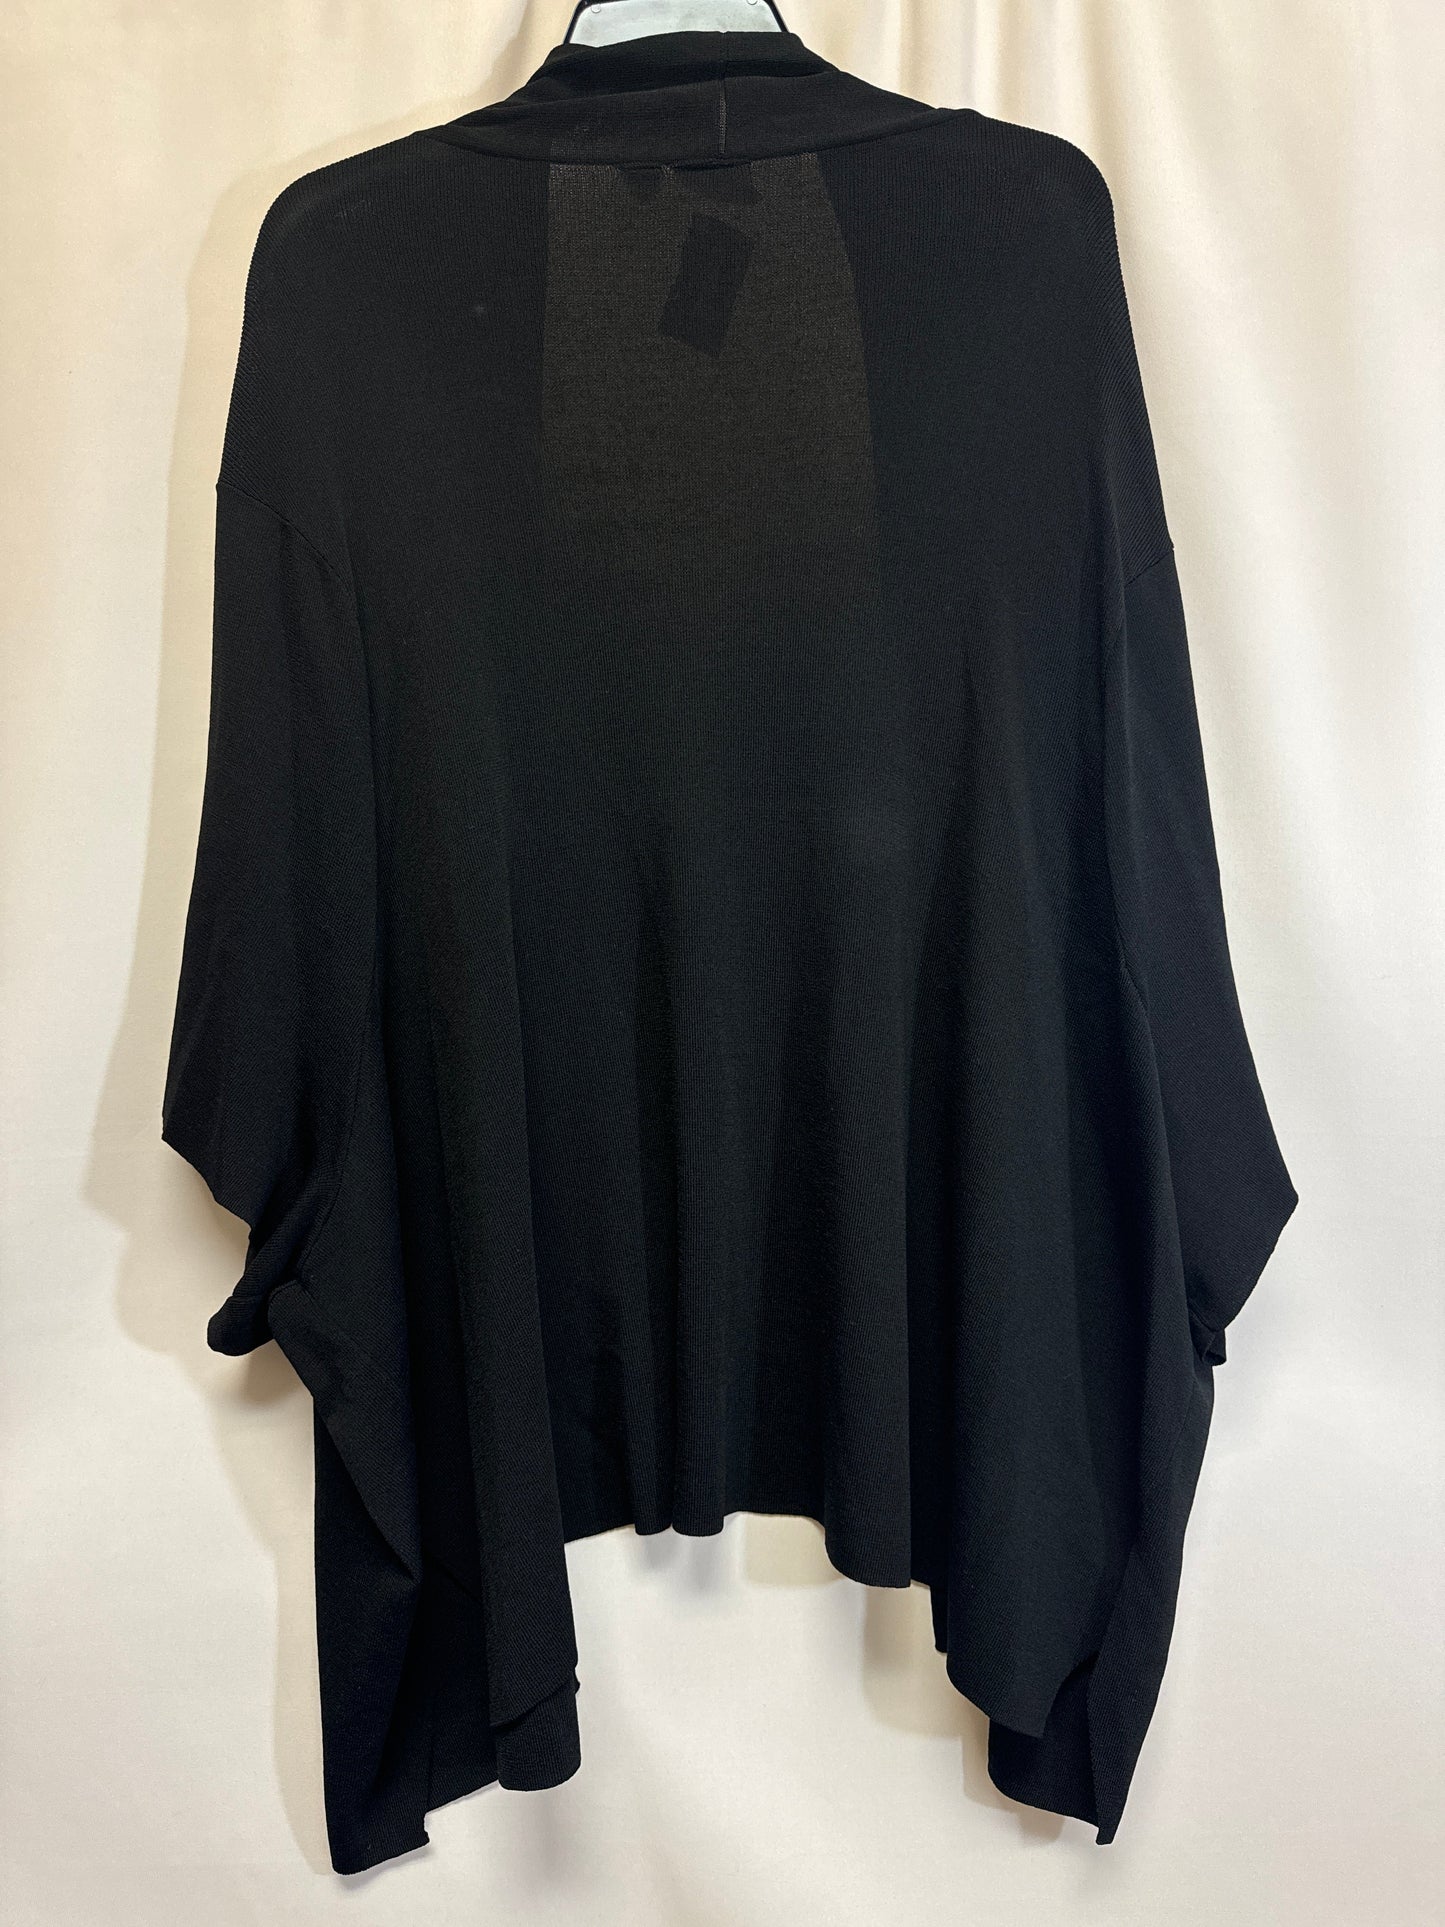 Black Cardigan Clothes Mentor, Size 3x